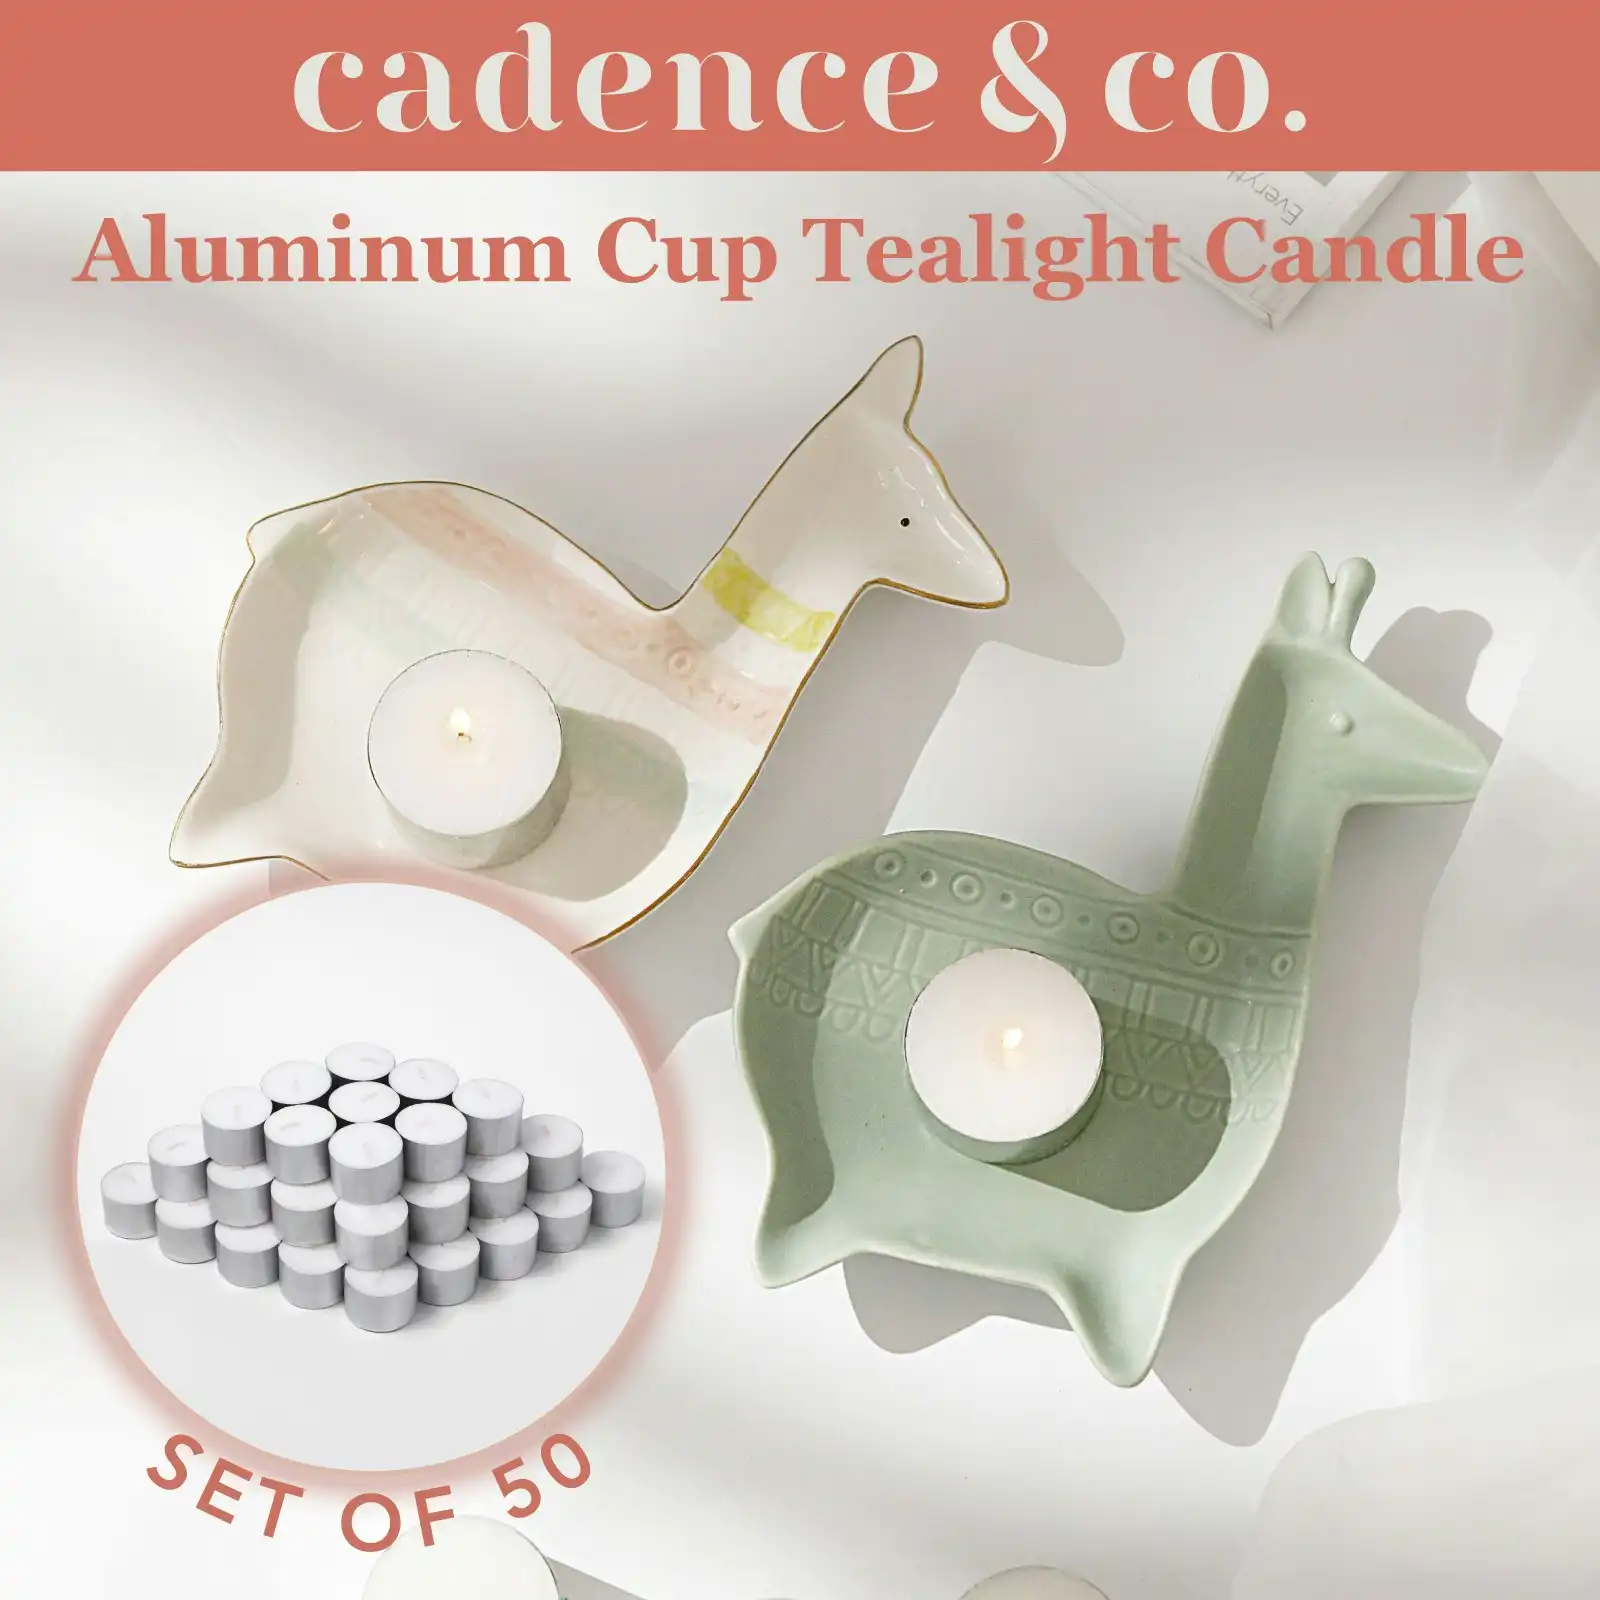 Cadence & Co. Aluminum Cup Tealight Candle Set 50